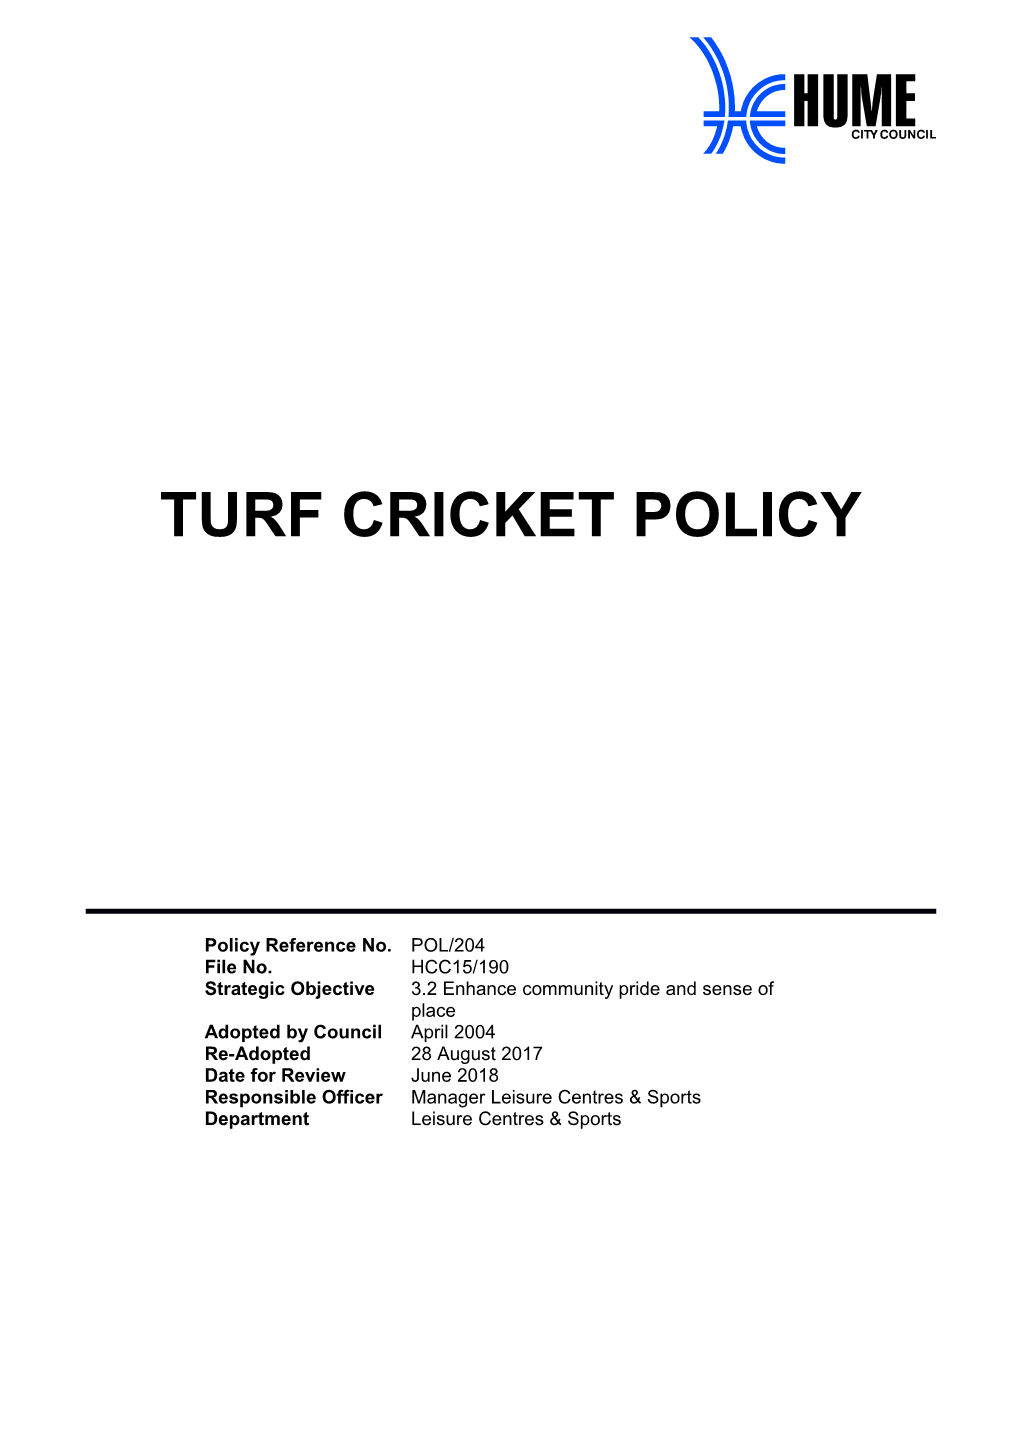 Turf Cricket Policy